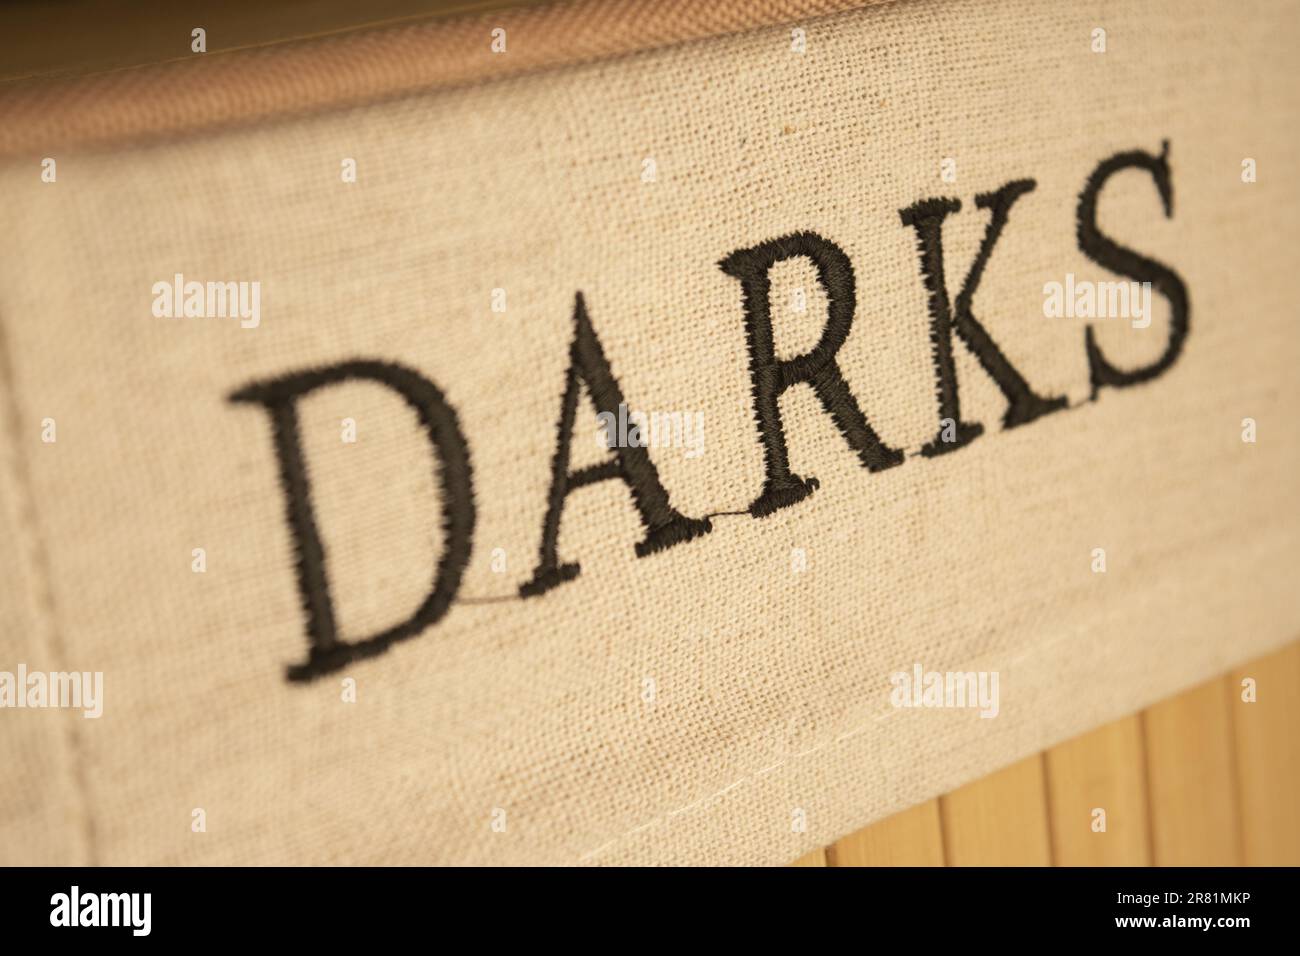 black writing darks on a juta canvas fabric Stock Photo